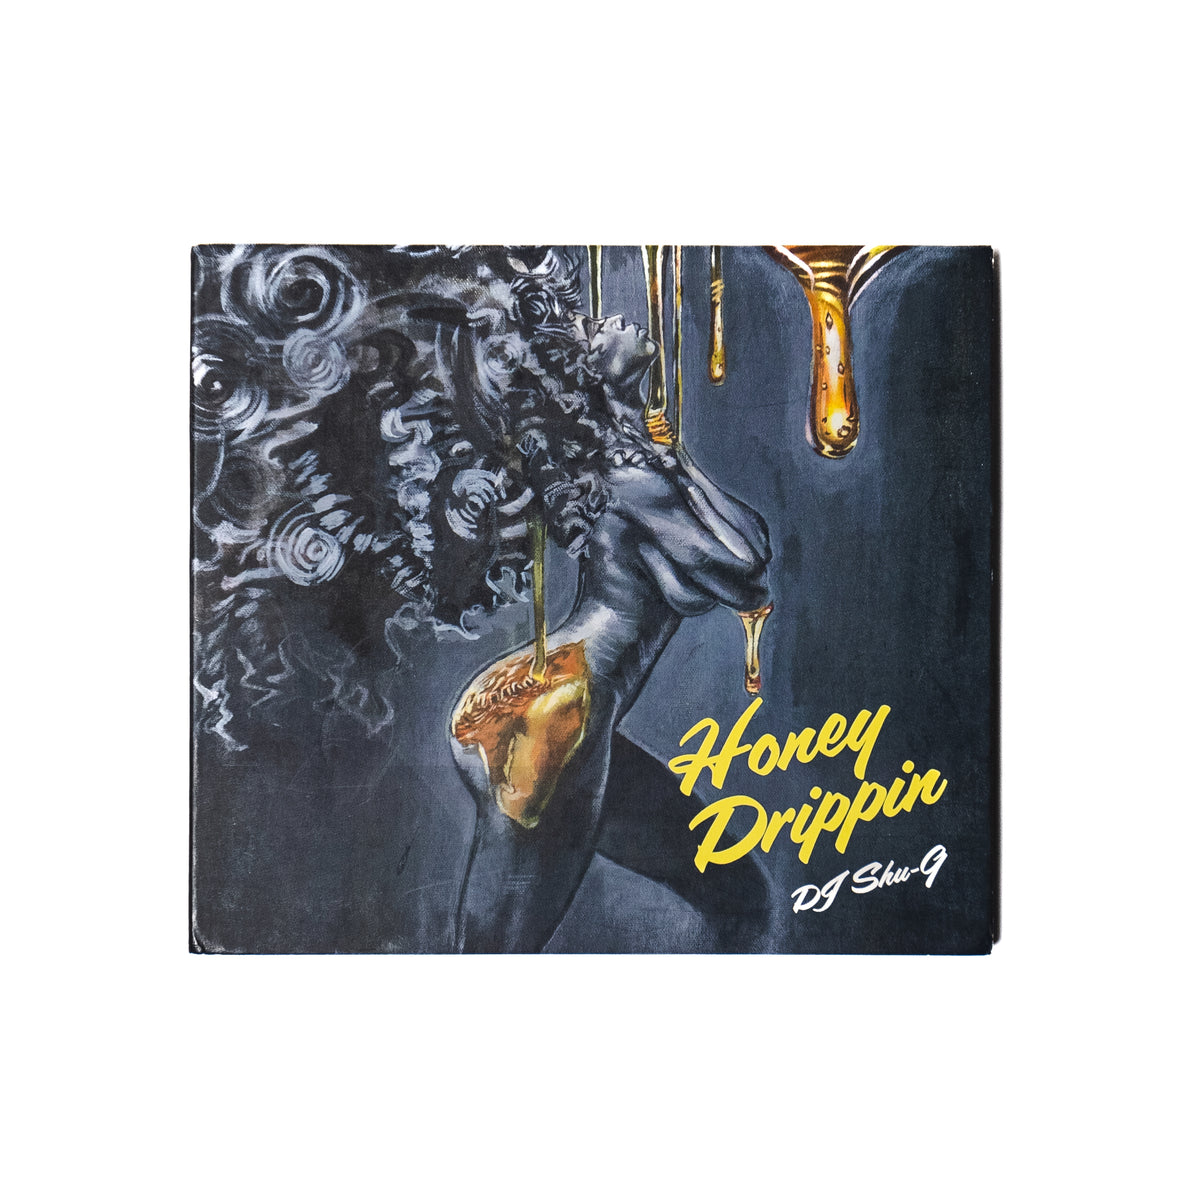 80's R&B & Disco Classic Mix "Honey Drippin"